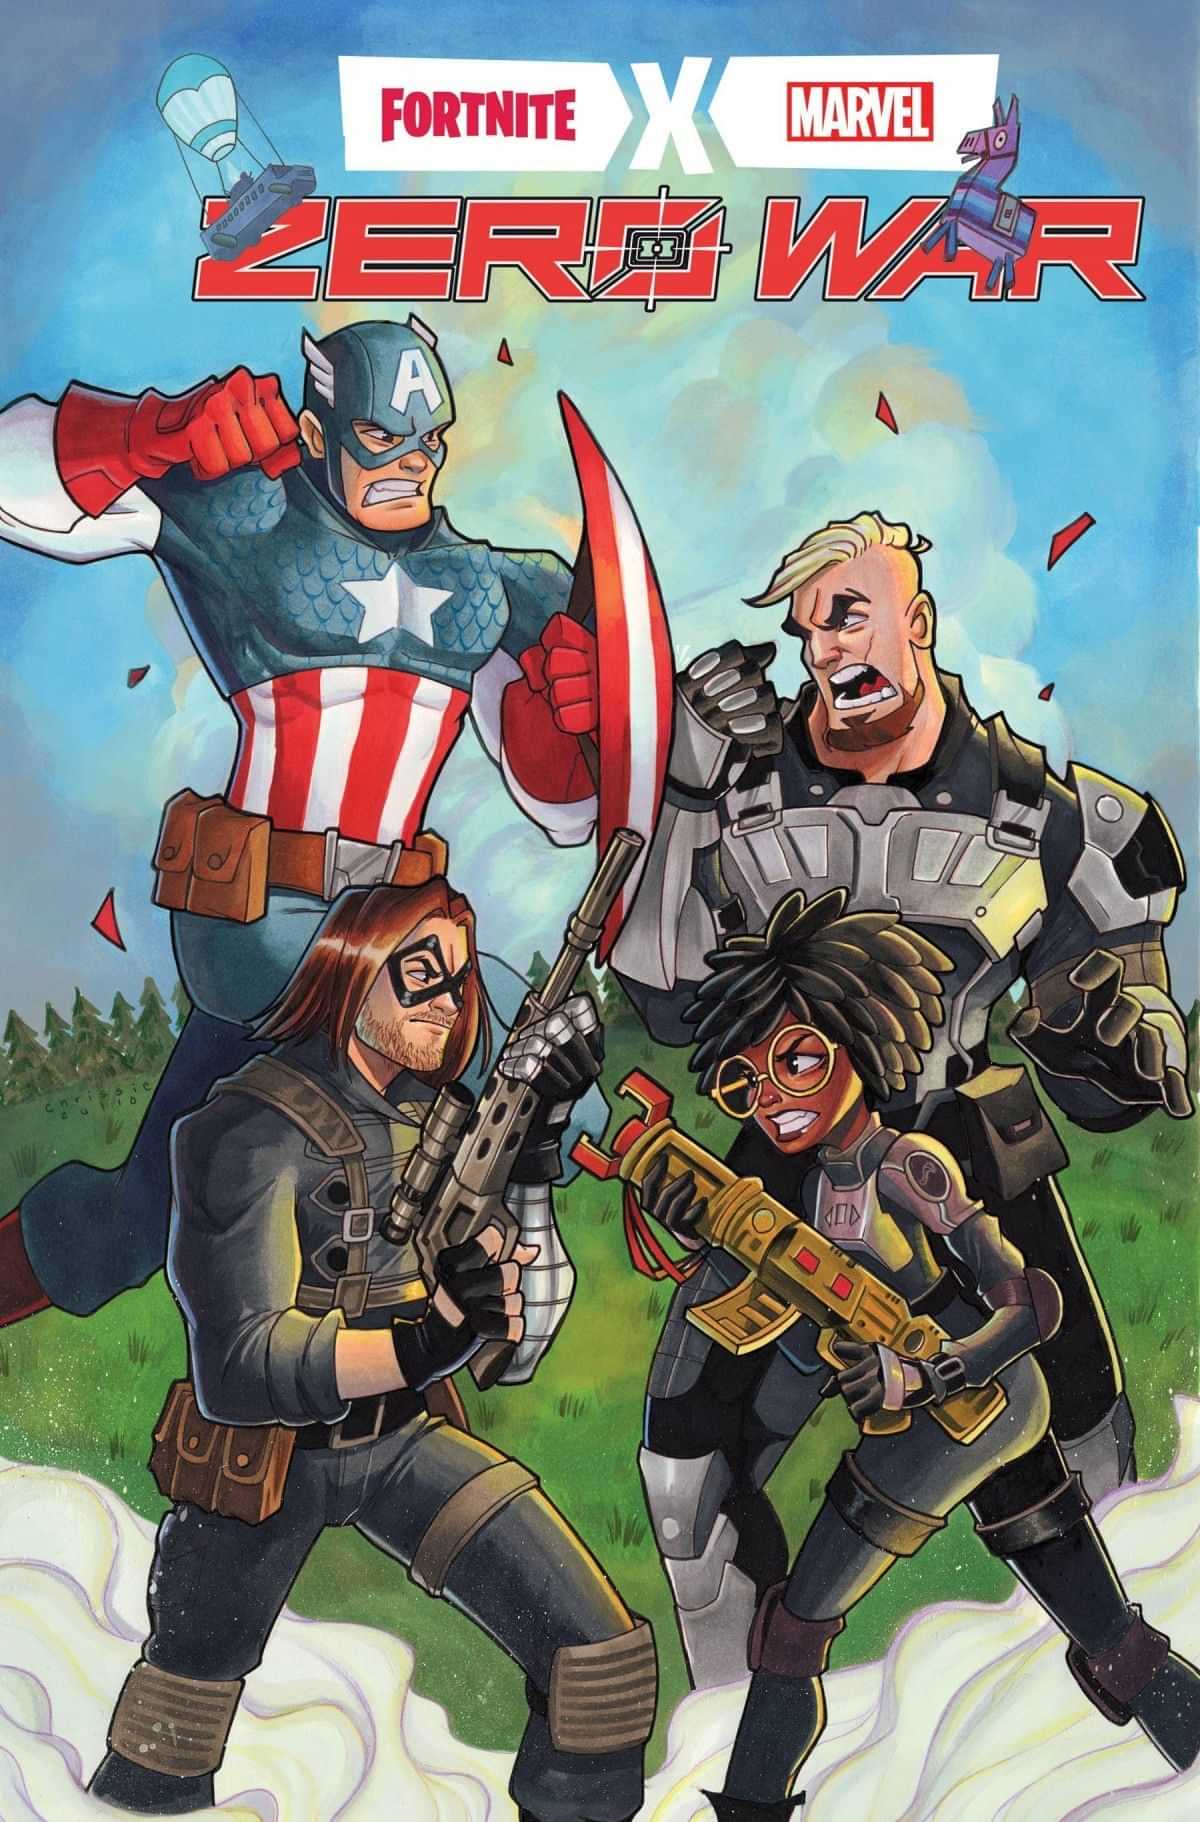 Fortnite X Marvel Zero War #2 Variant Zullo - Zeus Comics, Dallas, TX